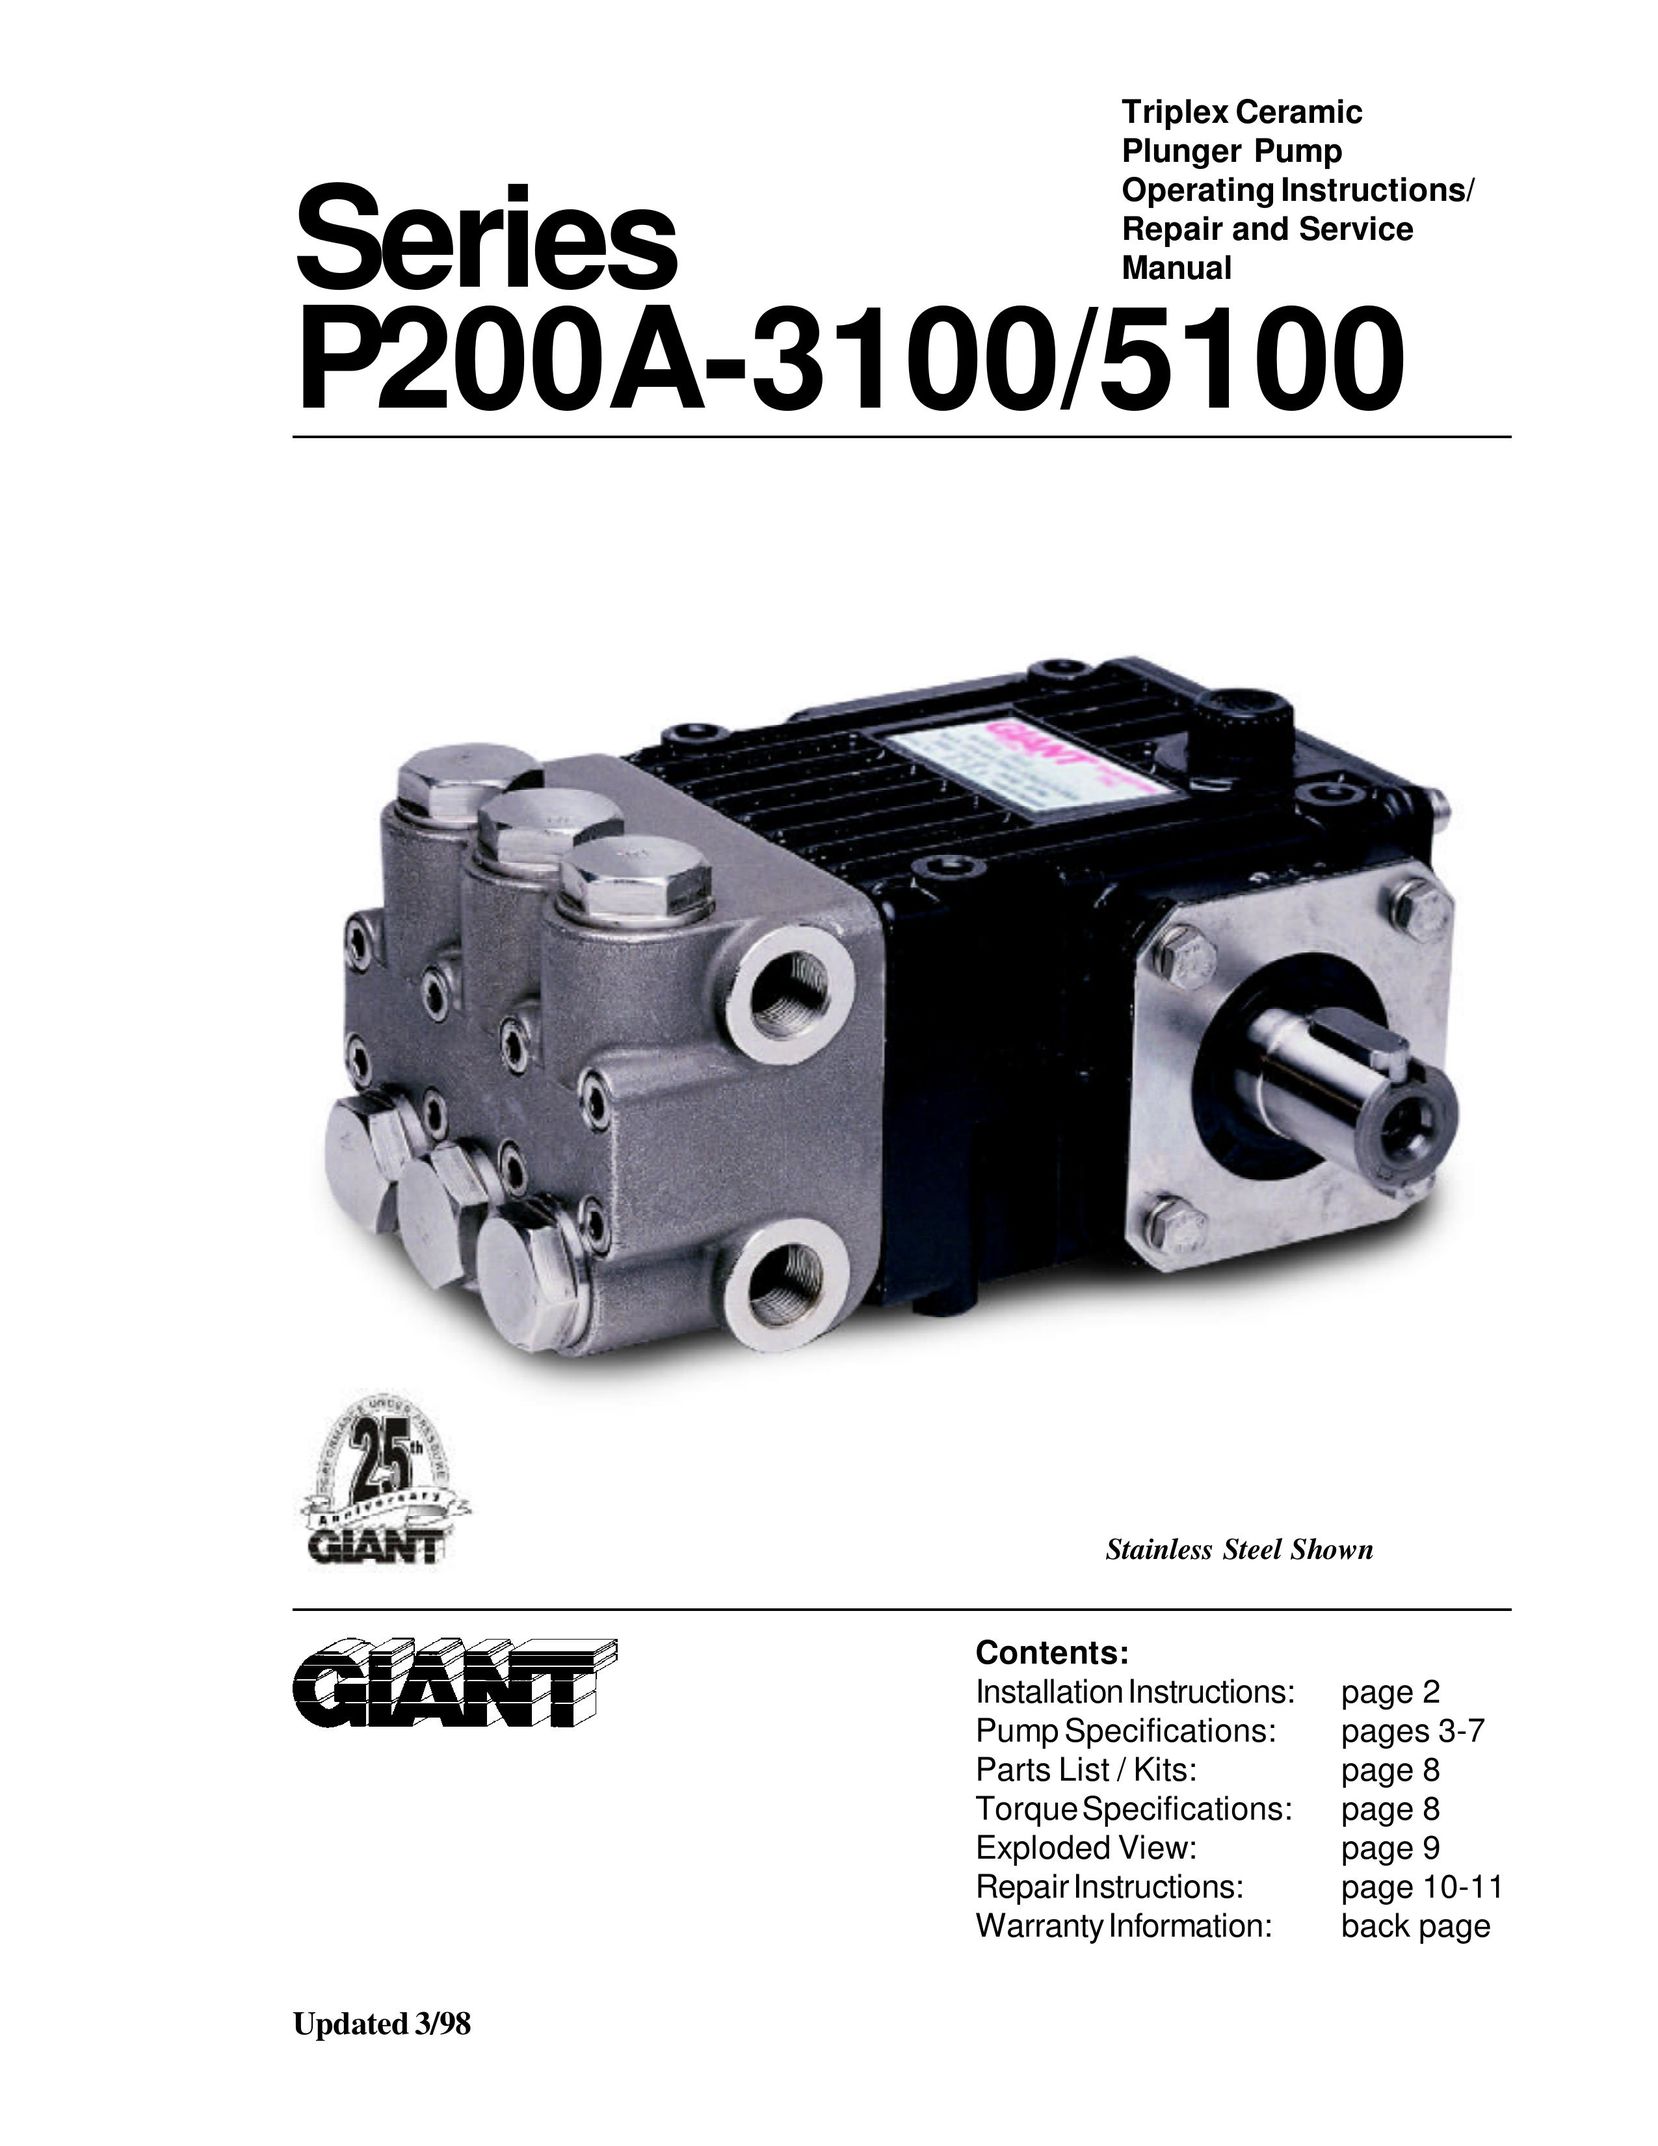 Giant Triplex Ceramic Plunger Pump Plumbing Product User Manual